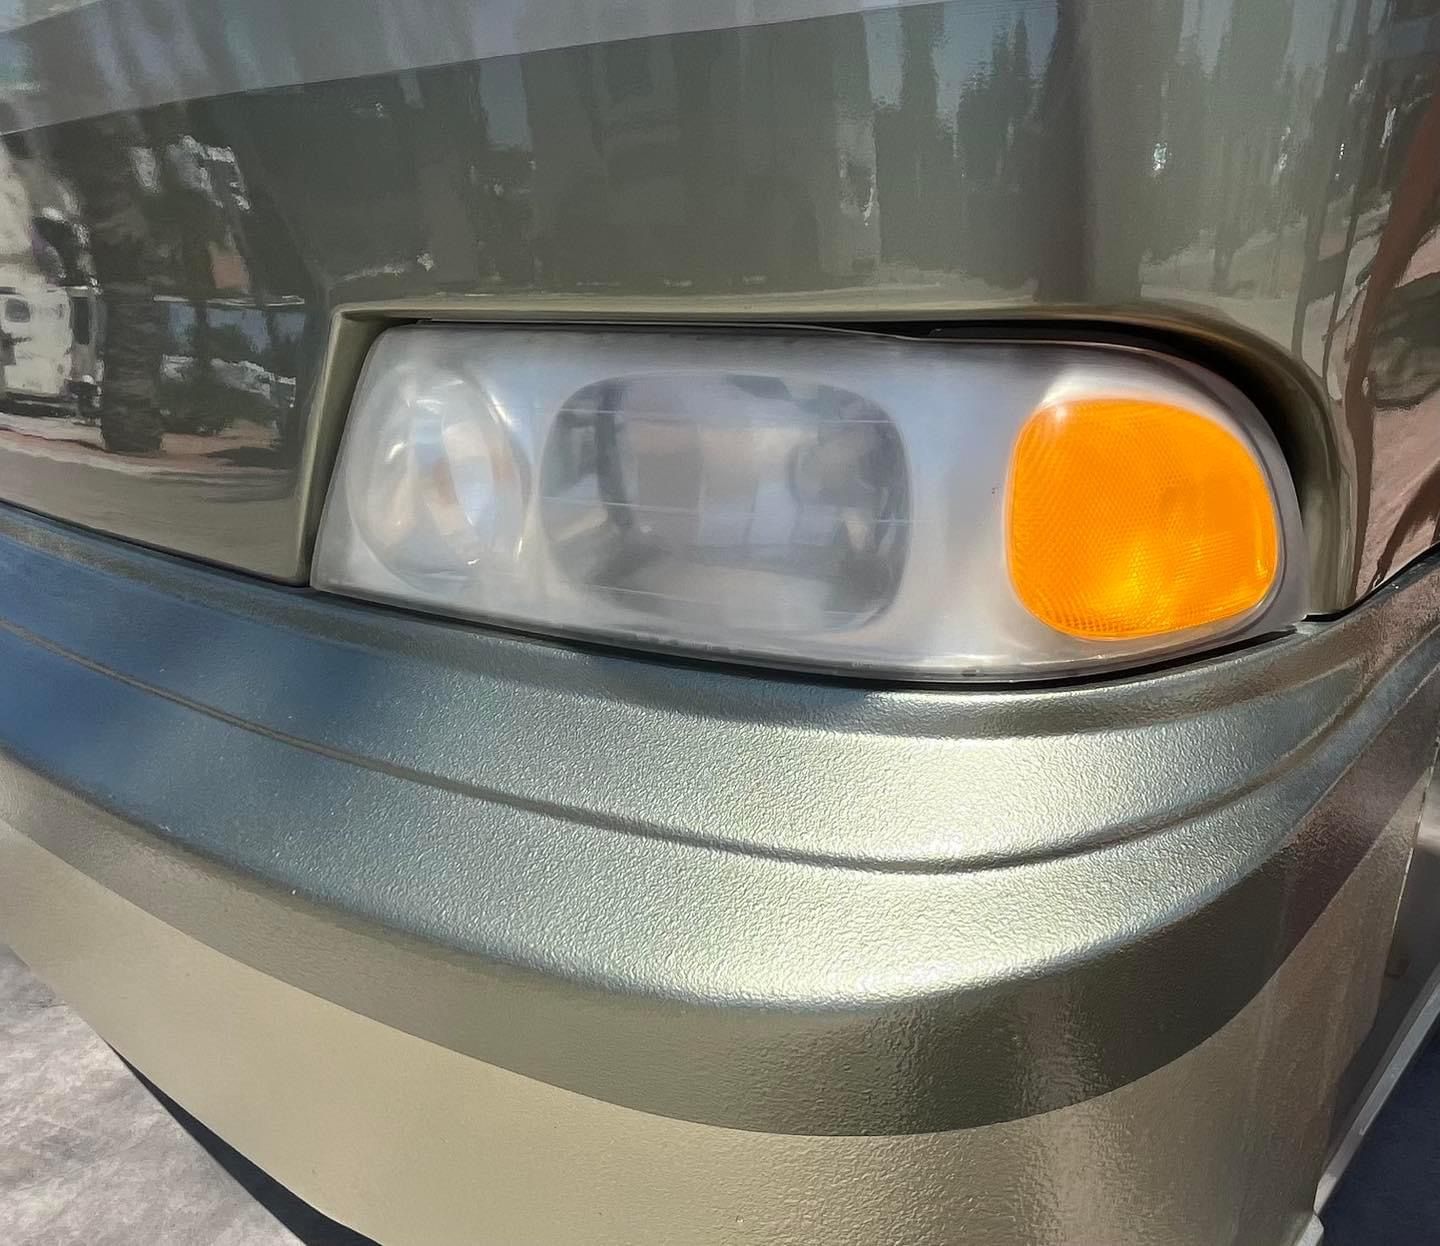 A close up of a car 's headlight and bumper